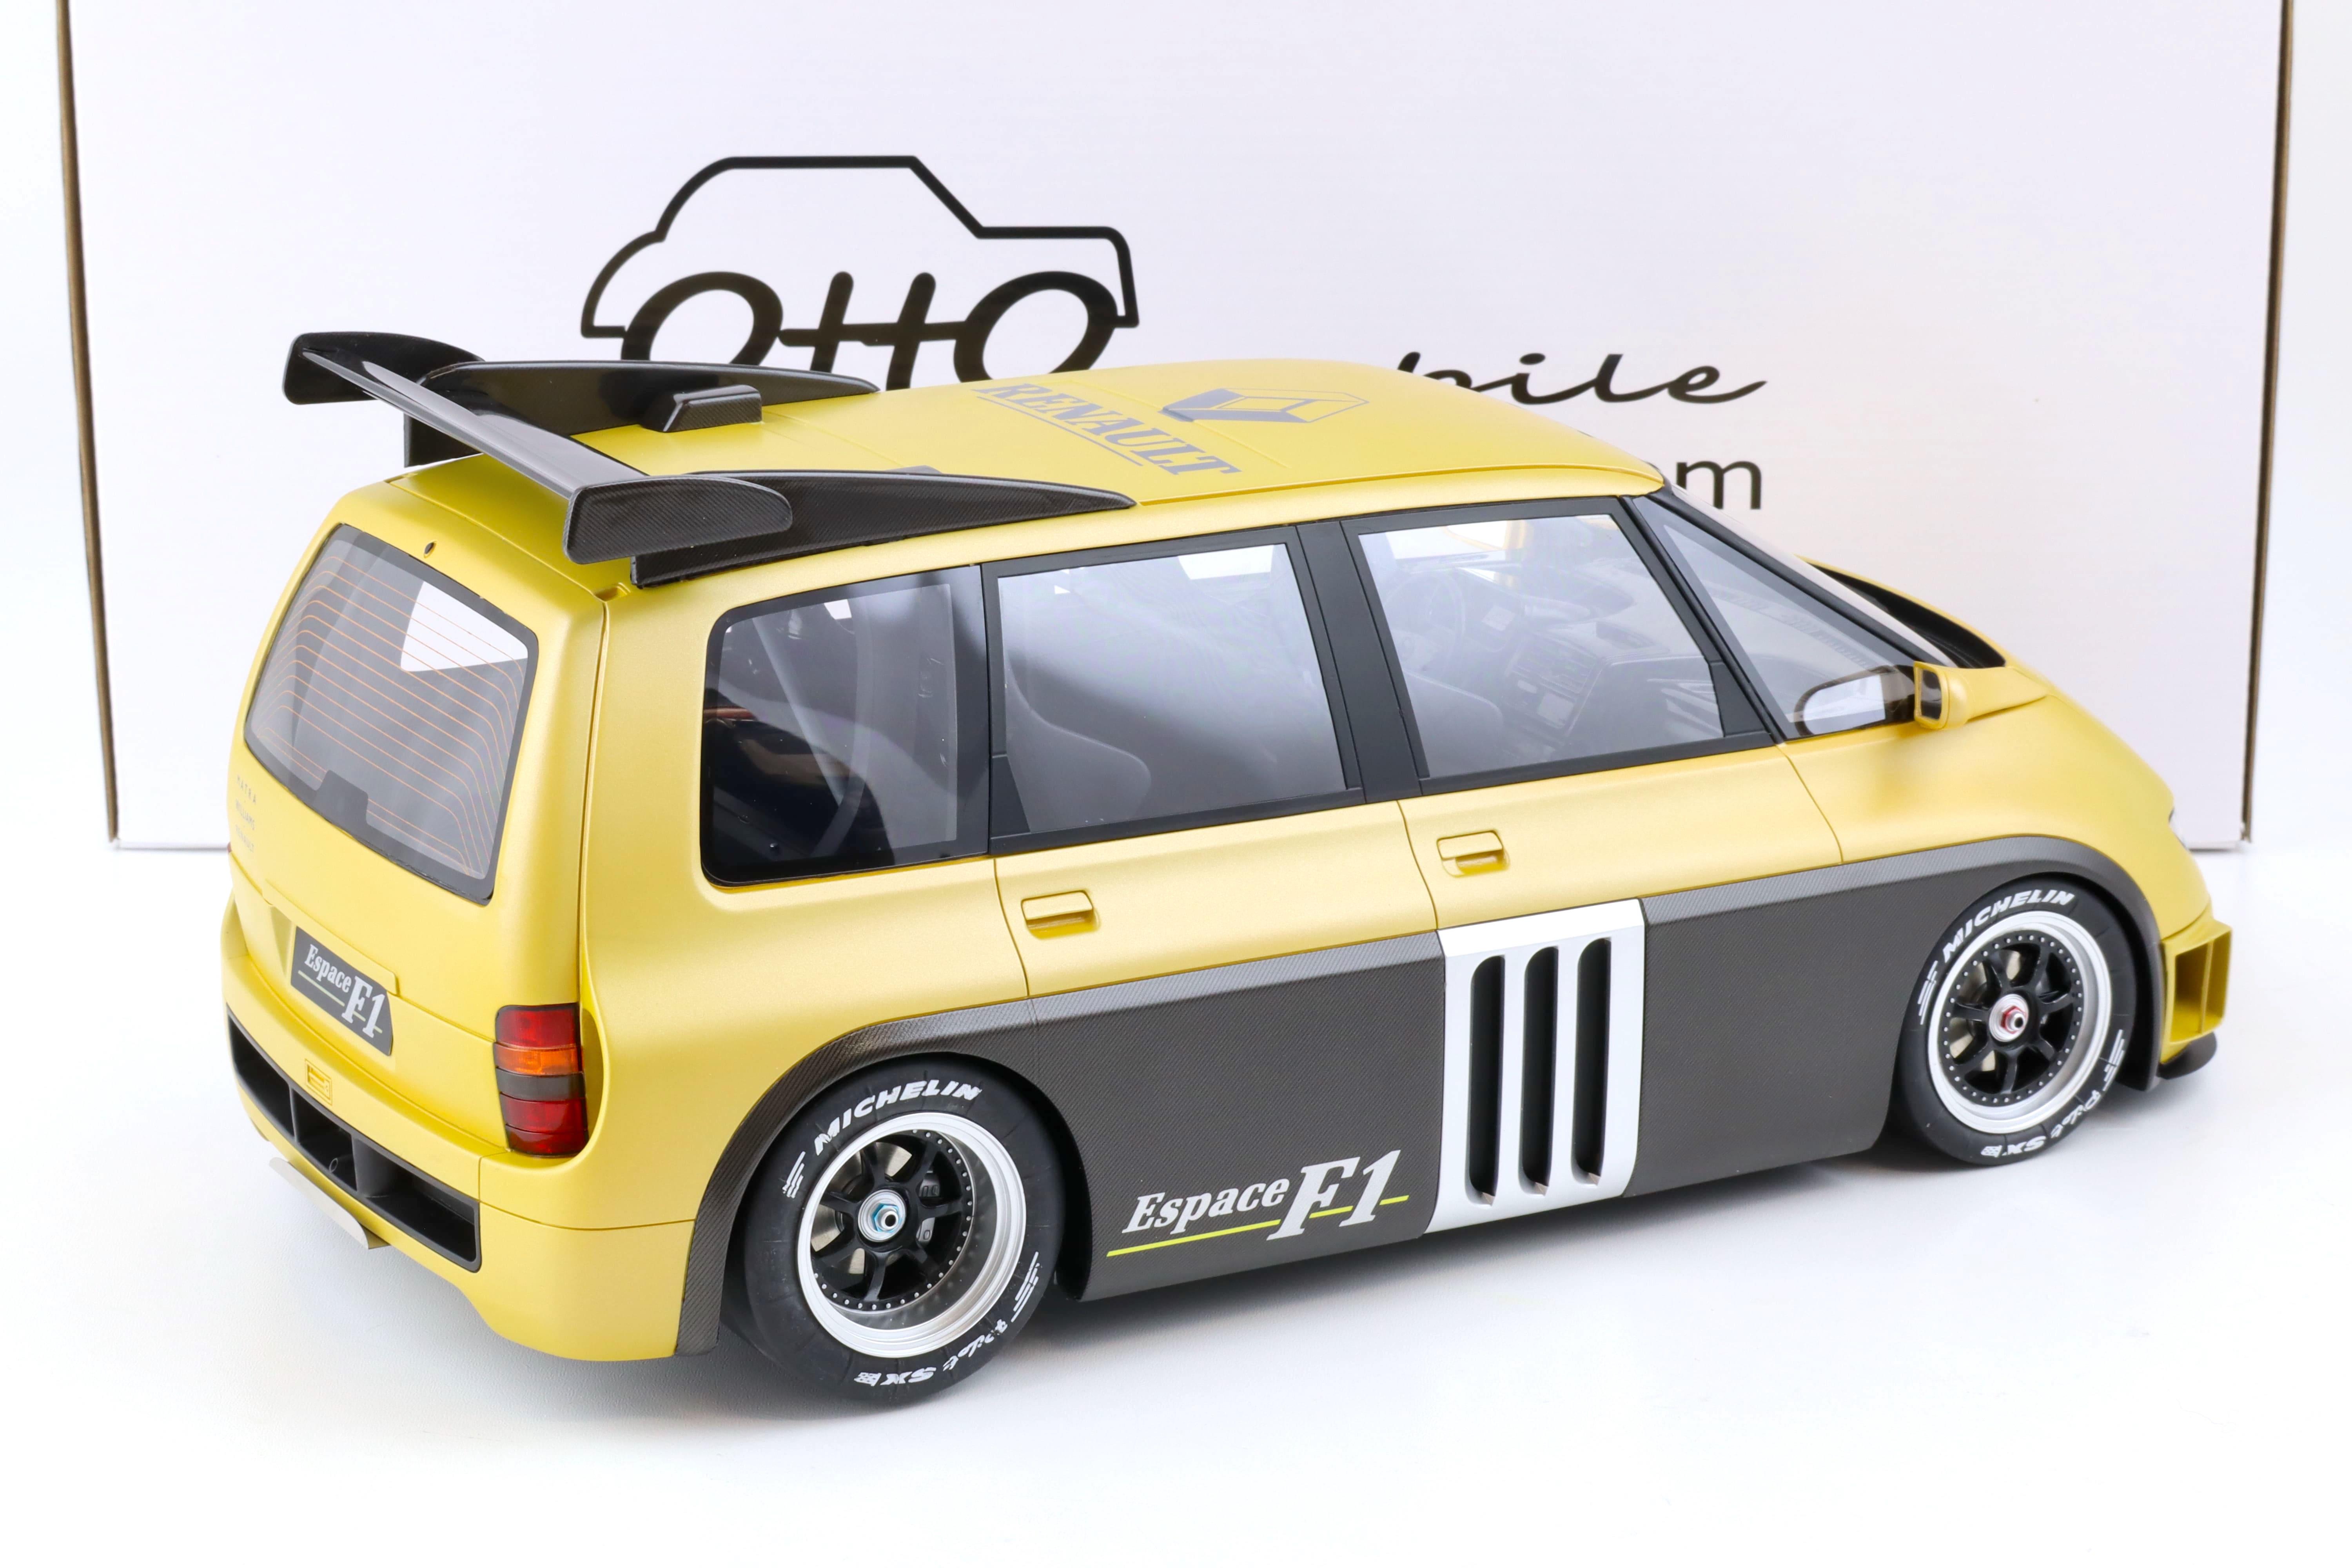 1:12 OTTO mobile G070 Renault Espace F1 matt yellow/ grey 1994